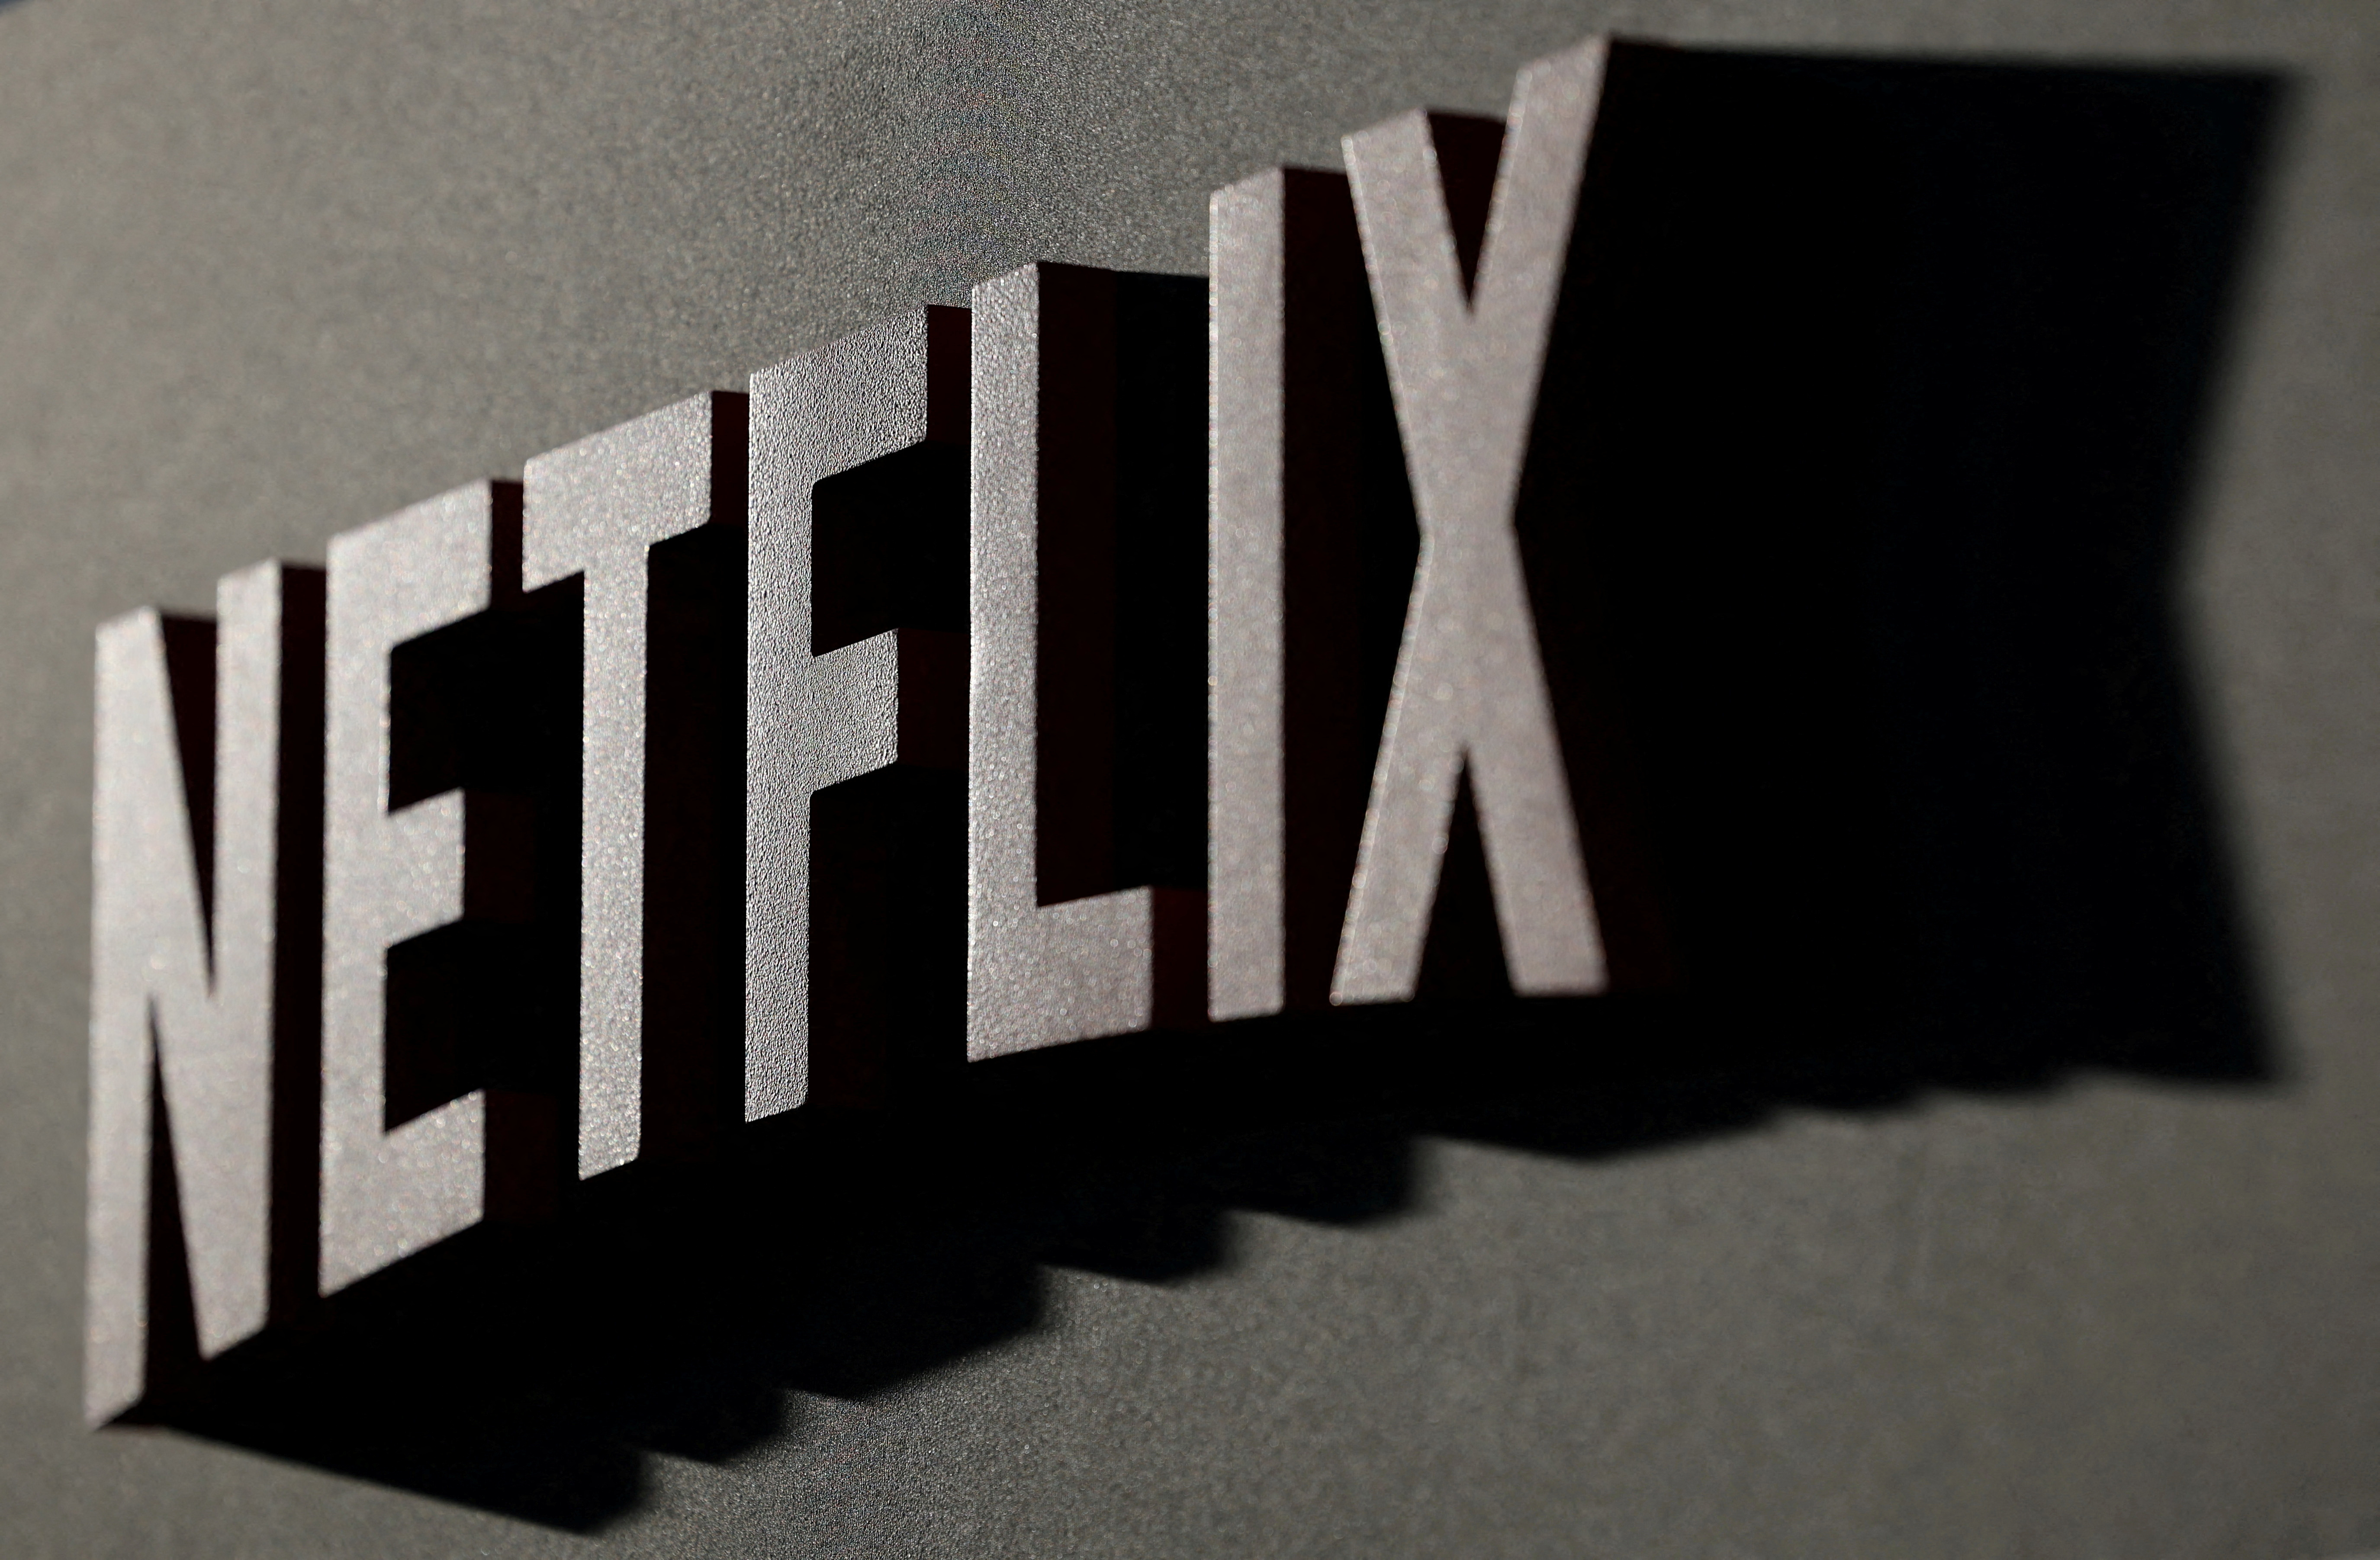 Netflix, entre las empresas acreedoras de FTX
Reuters
